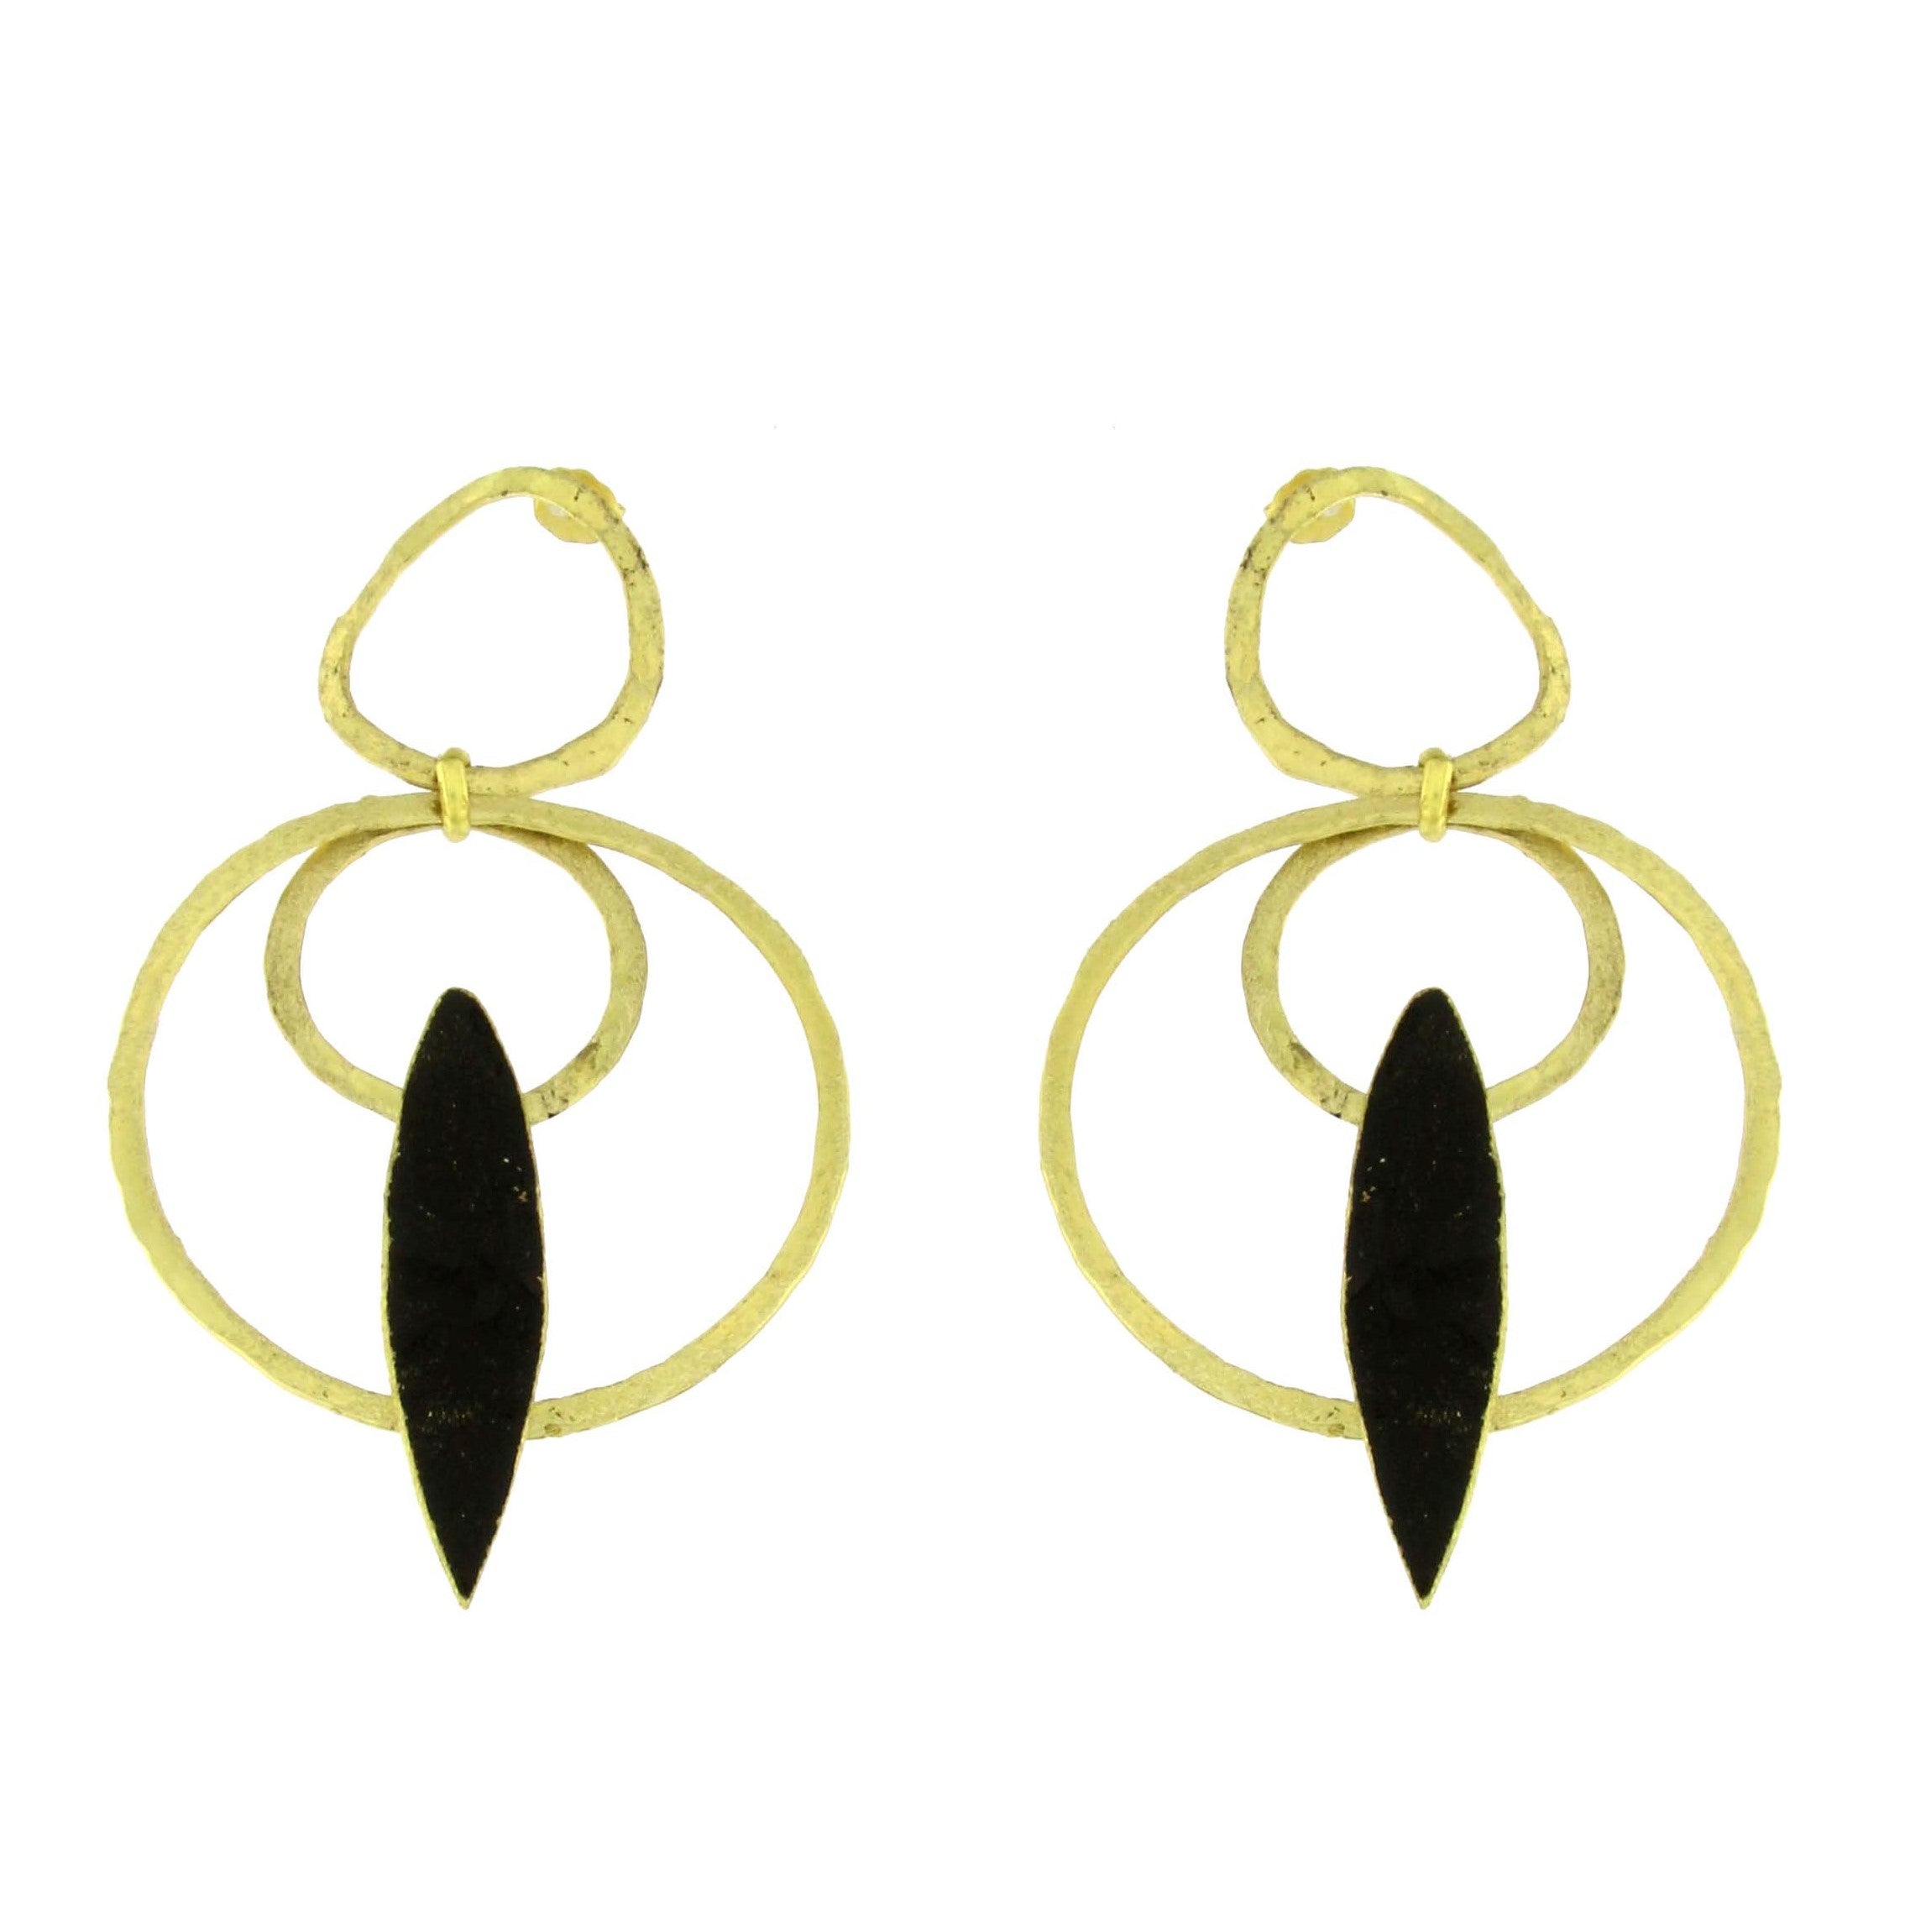 Bronze Earrings - The Nancy Smillie Shop - Art, Jewellery & Designer Gifts Glasgow